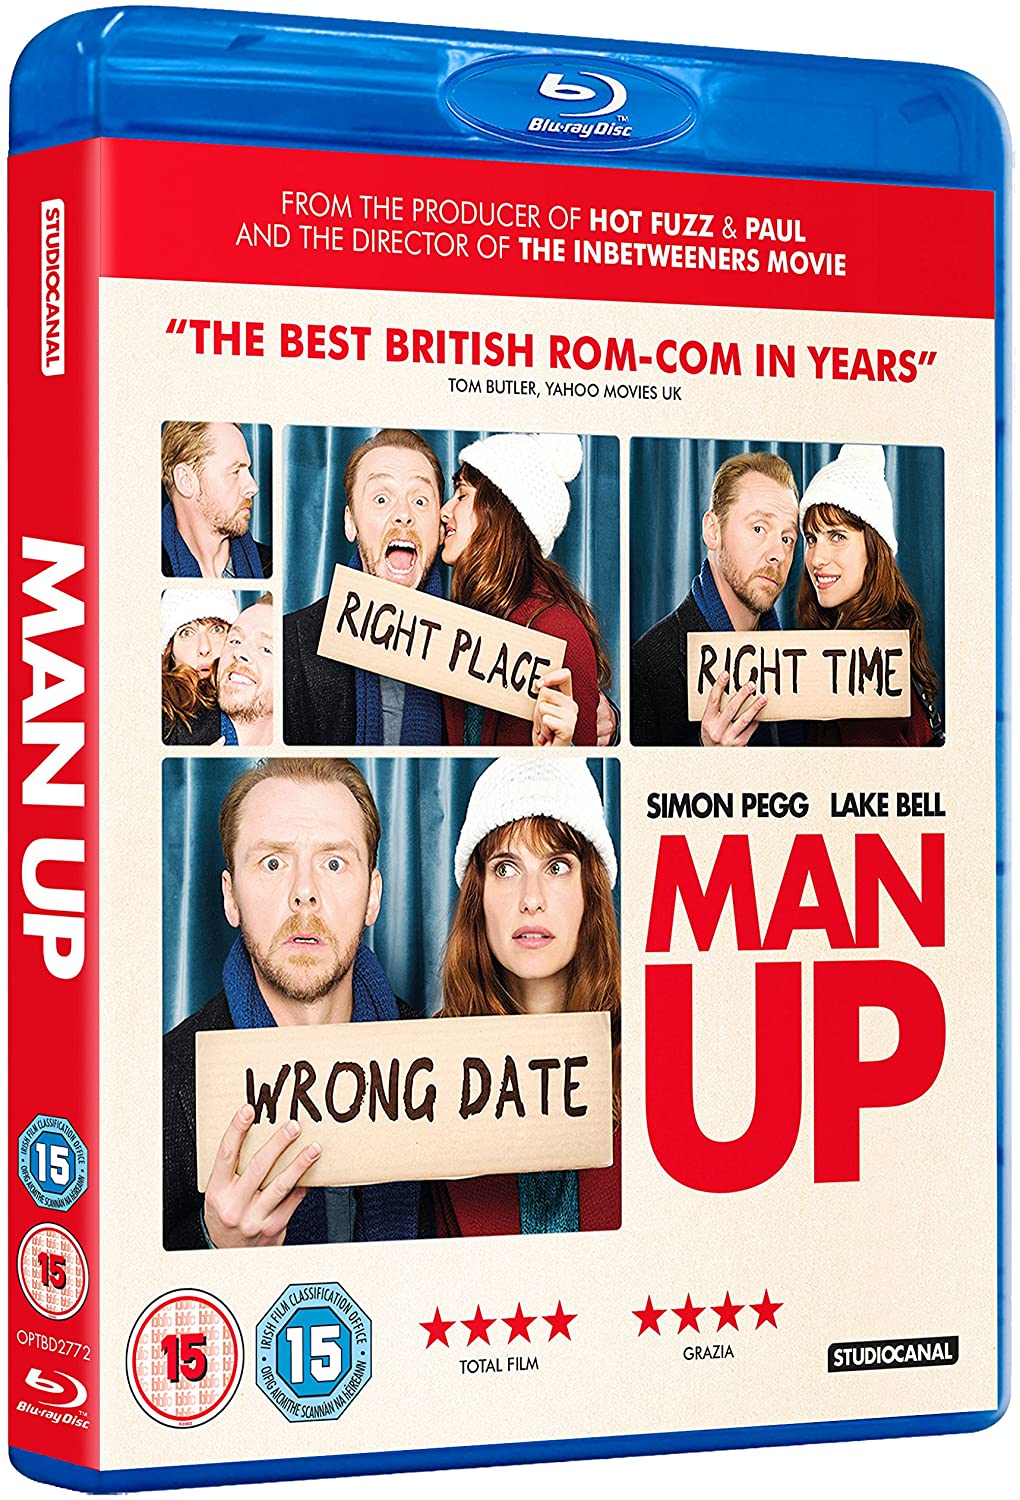 Man Up [2015] - Romance/Drama [DVD]